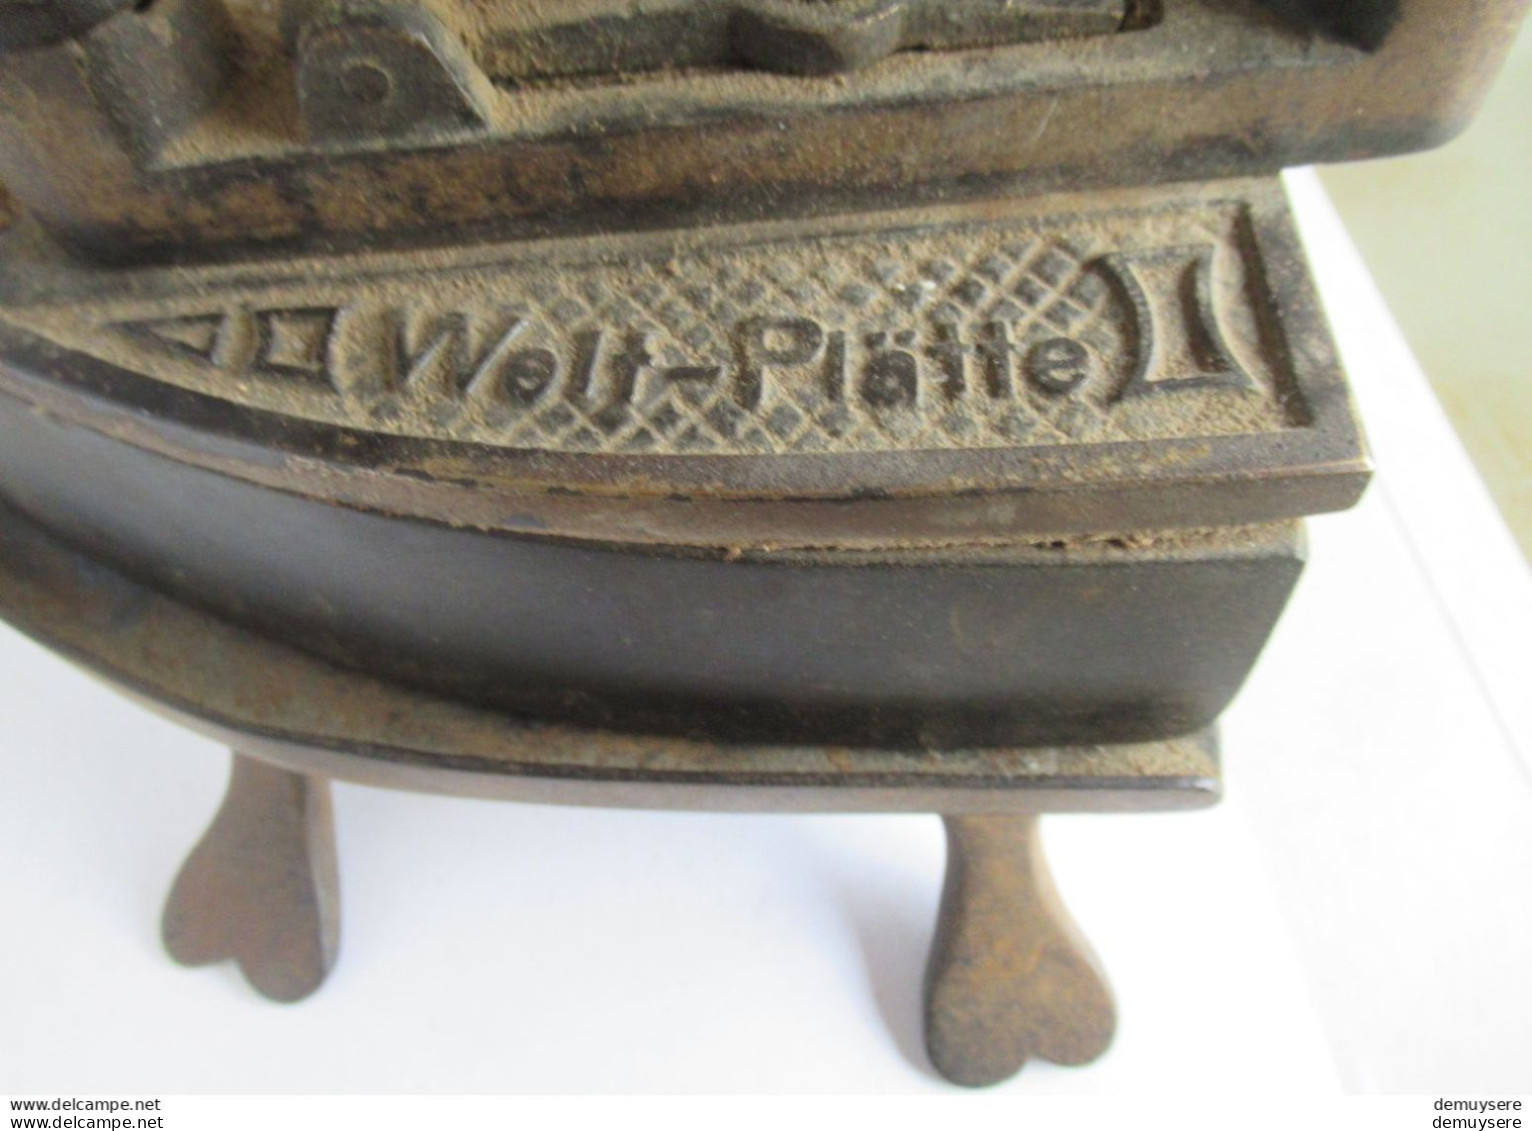 0404 16 - 50-25- LADE  700 - Antiek Strijkijzer Met Voet - Fer Antique Avec Base - Welt Platte -  4100 Gram - Antike Werkzeuge